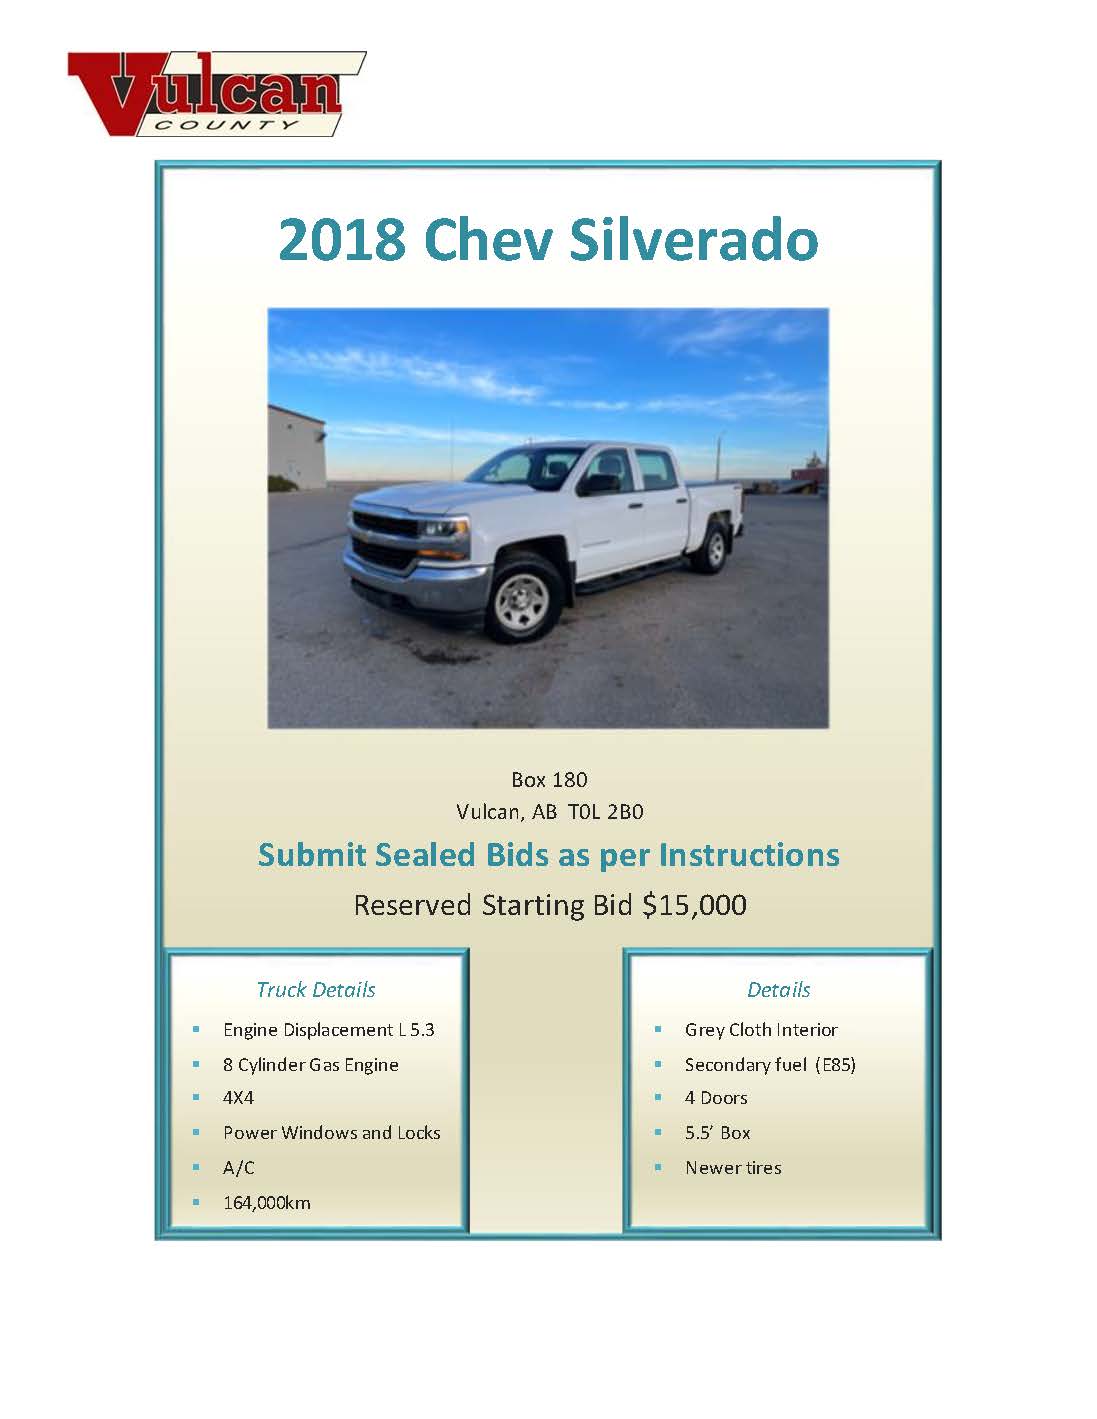 County Accepting Sealed Bids for 2018 Chevrolet Silverado